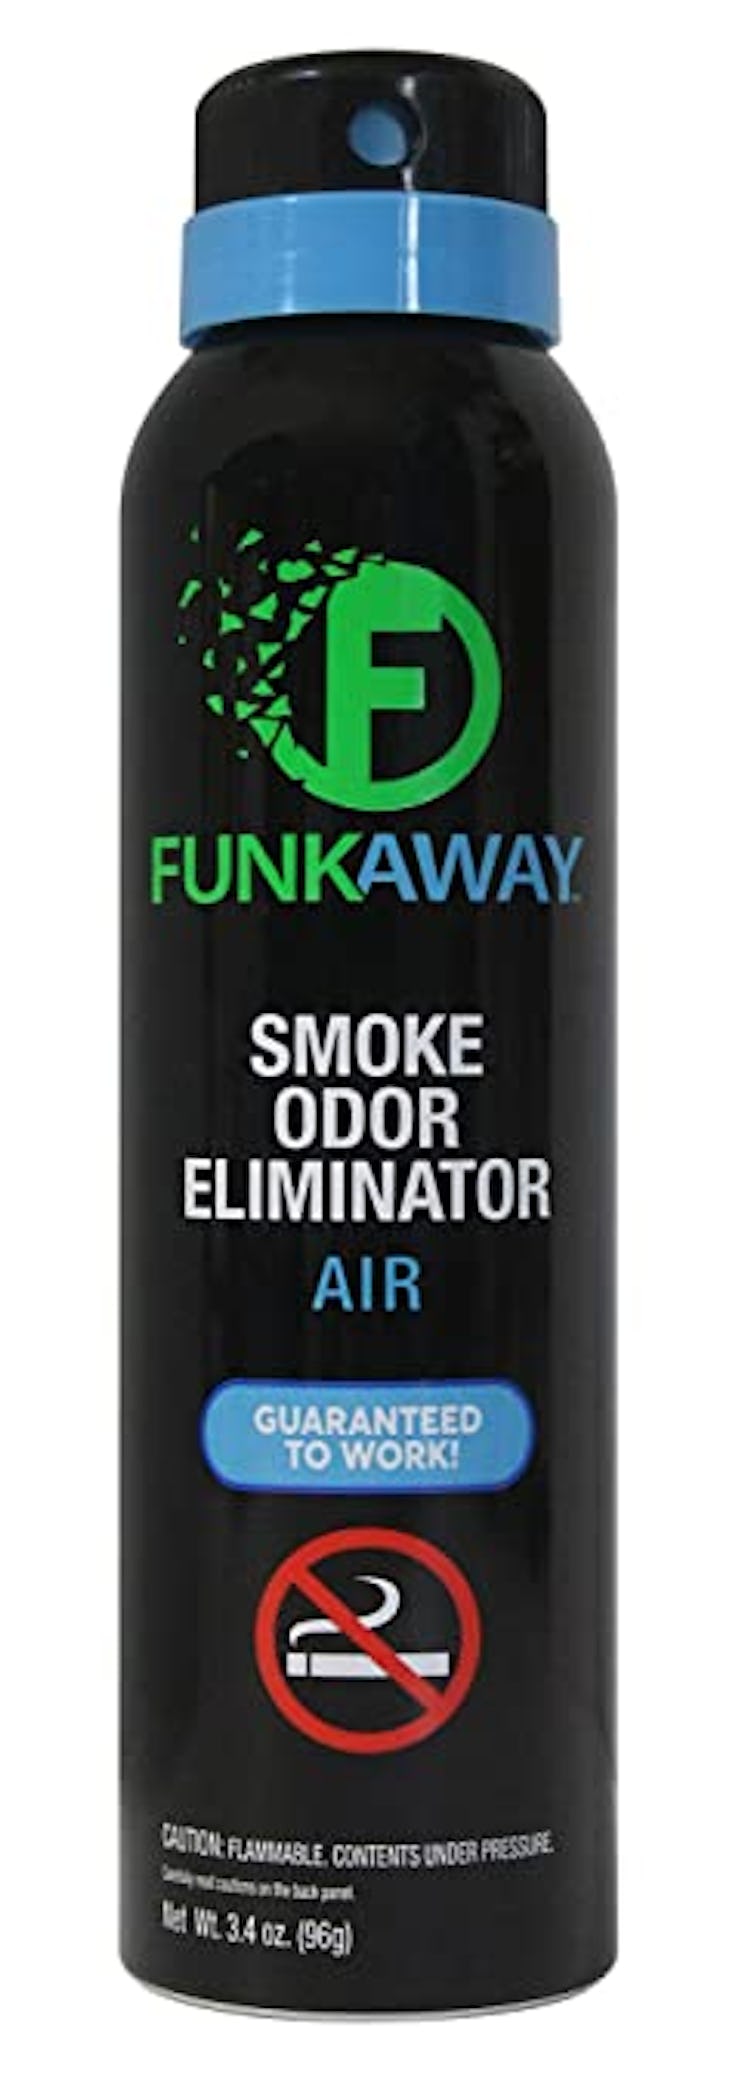 FunkAway Smoke Odor Eliminator Spray